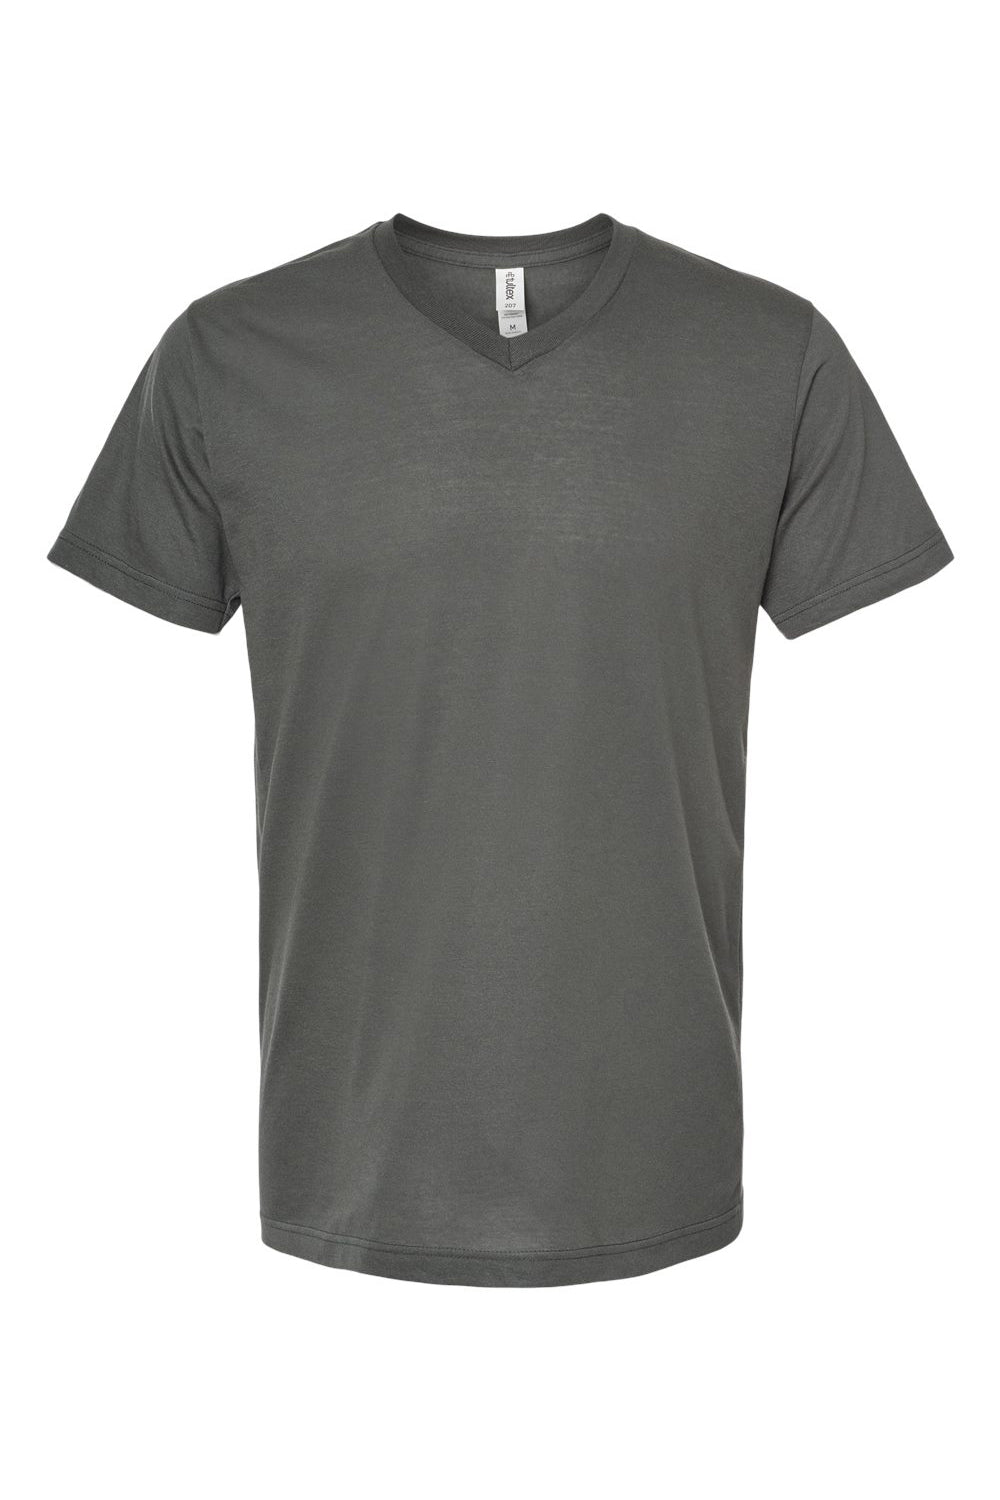 Tultex 207 Mens Poly-Rich Short Sleeve V-Neck T-Shirt Charcoal Grey Flat Front